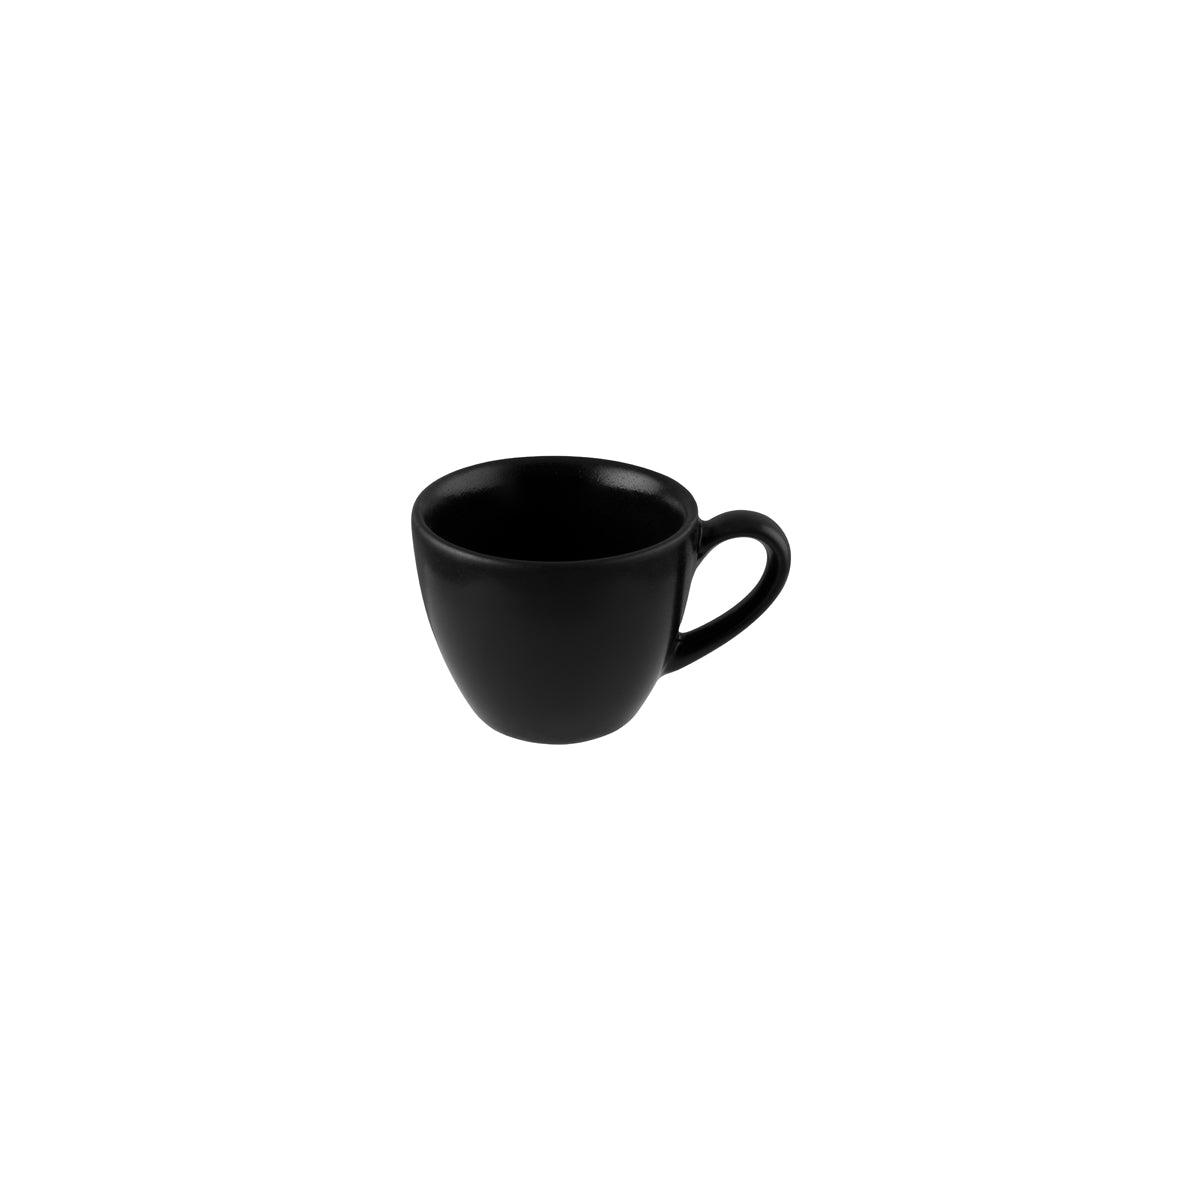 130781 Bonna Notte Black Rita Coffee Cup 90x75mm/80ml Tomkin Australia Hospitality Supplies